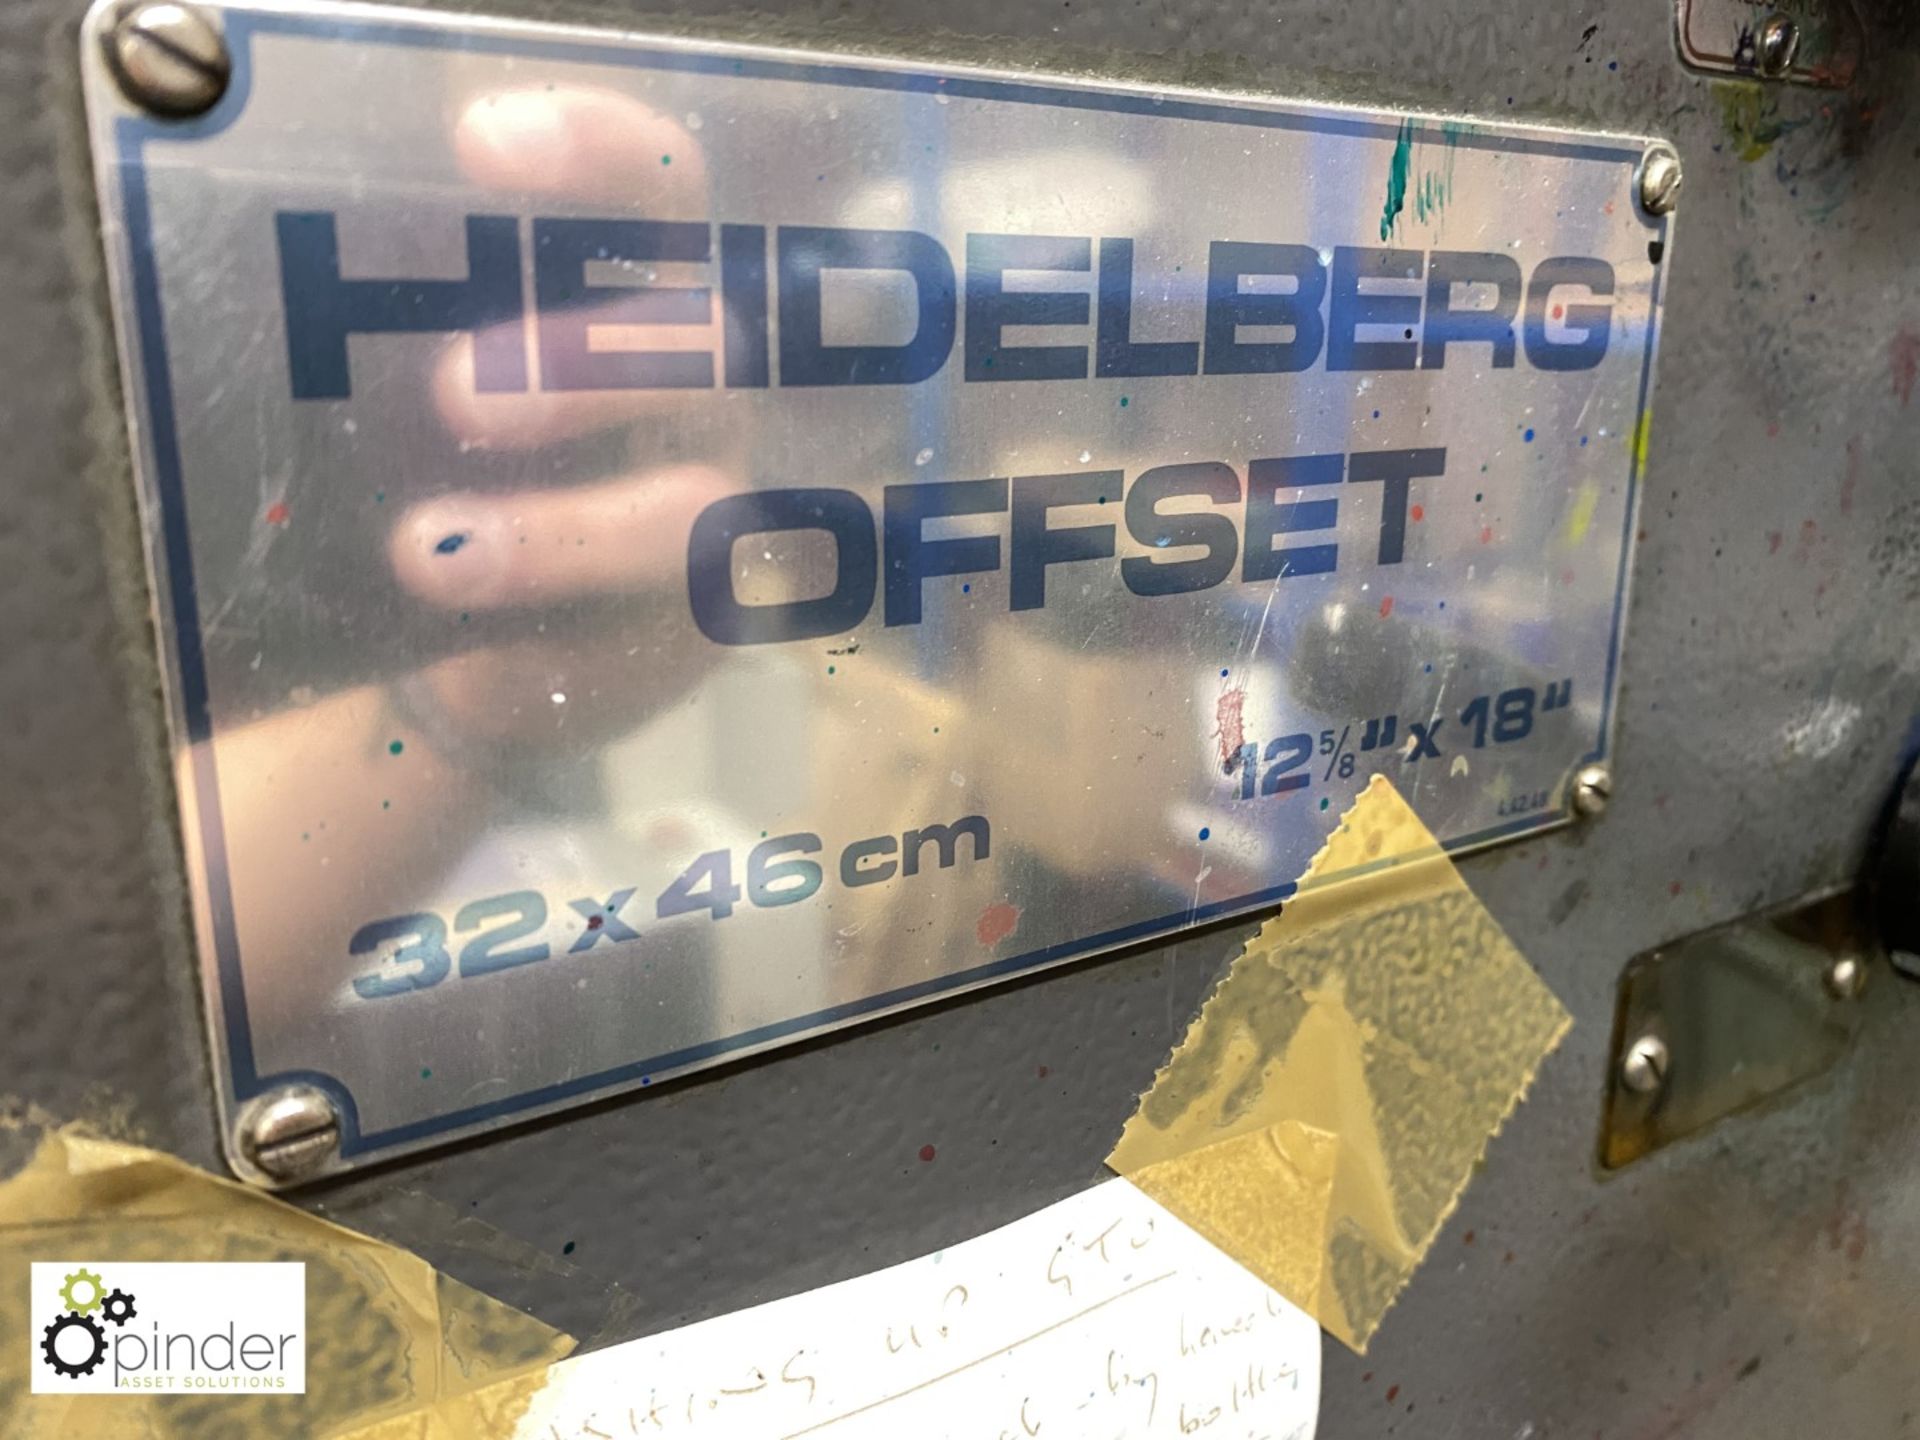 Heidelberg GTO 46 single colour Offset Press, 86153664 impressions, 32x46cm, serial number 669378, - Image 4 of 15